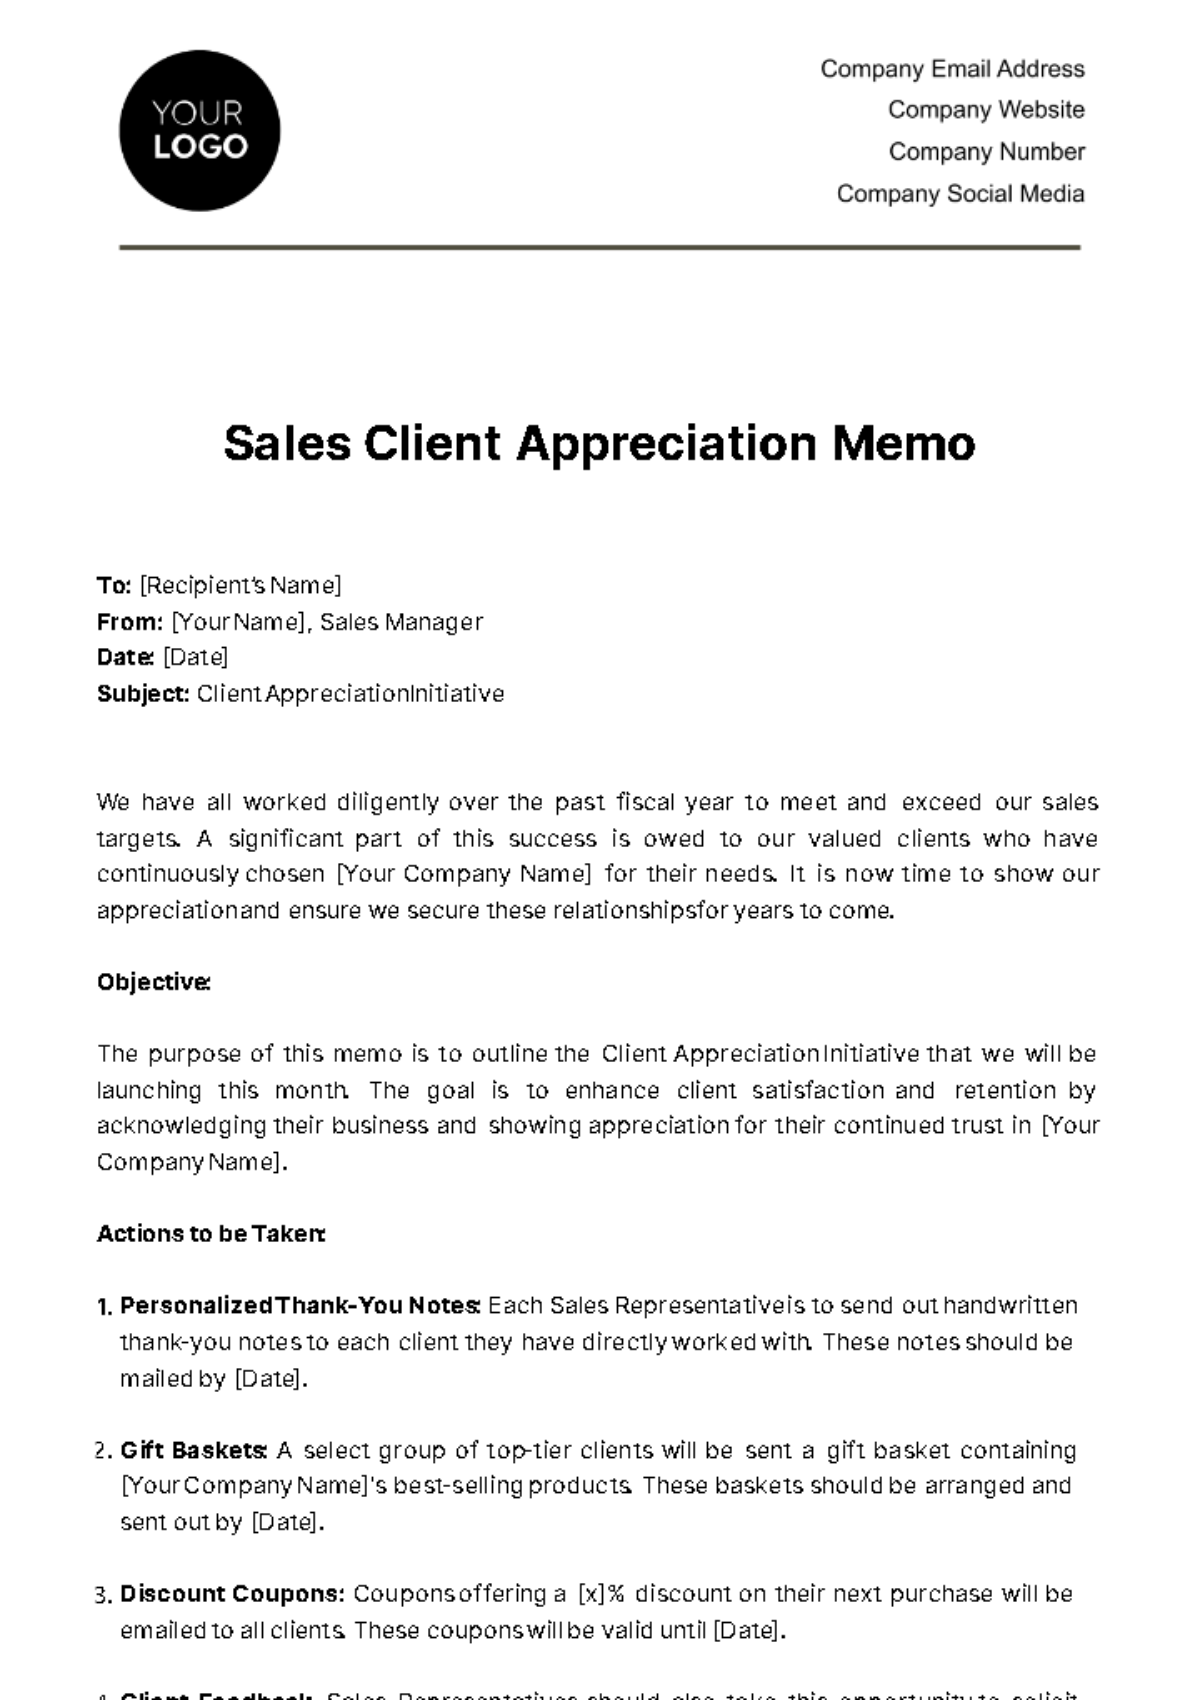 Sales Client Appreciation Memo Template